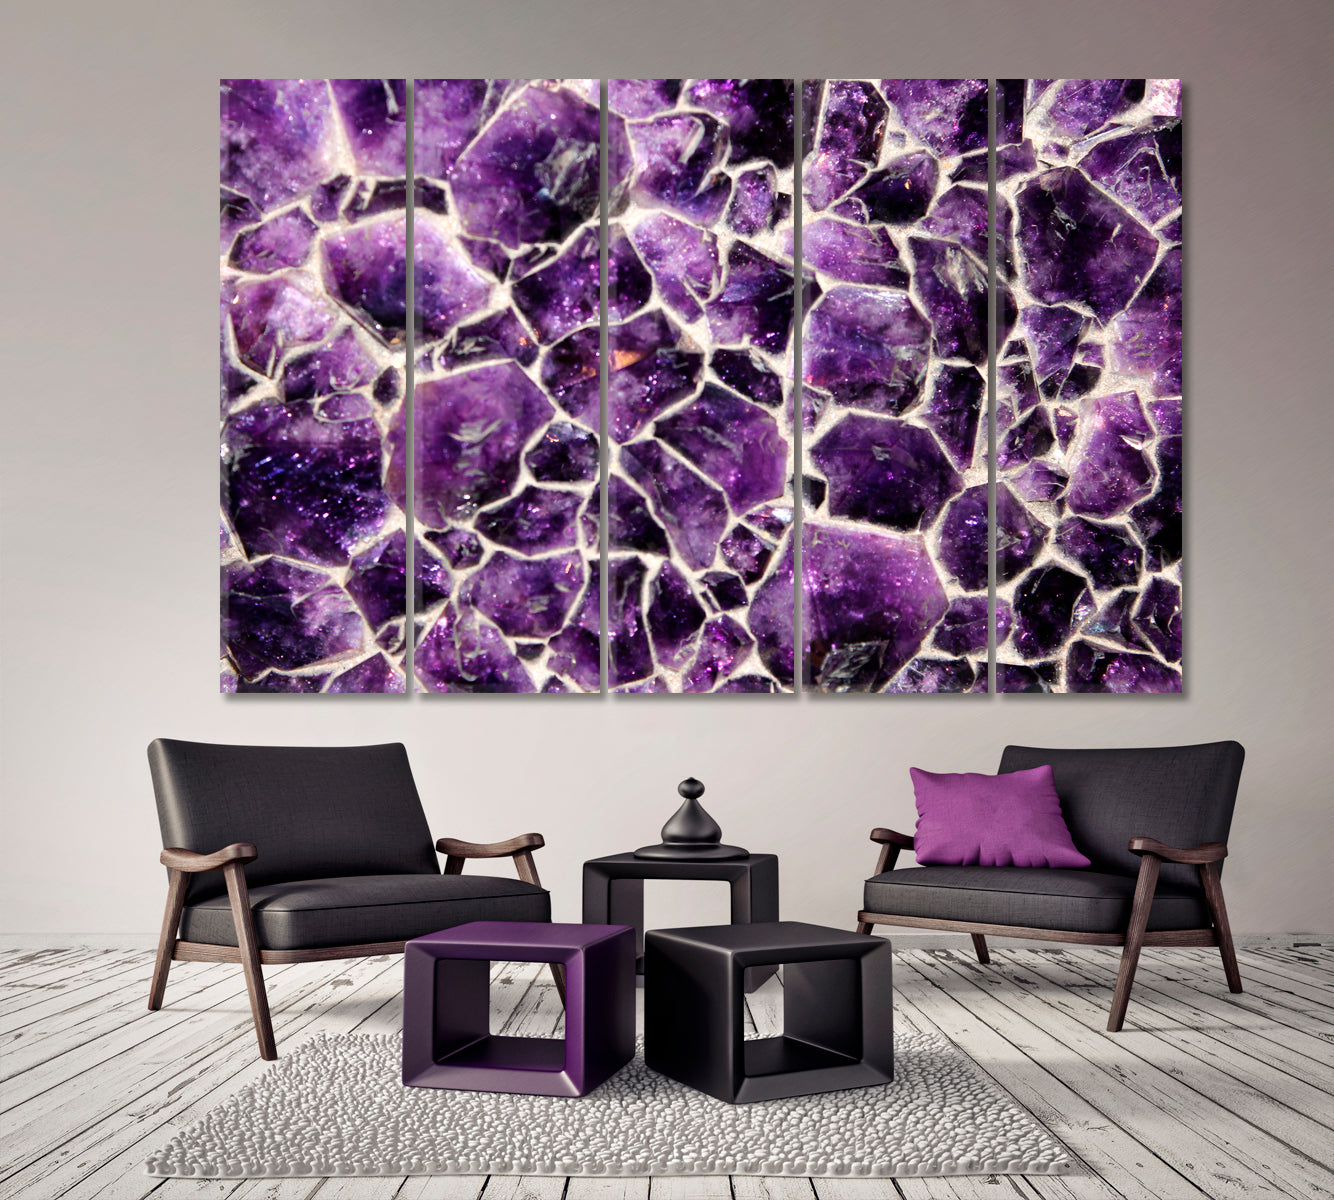 Natural Purple Amethyst Crystals Stunning Beautiful Rock Abstract Art Print Artesty 5 panels 36" x 24" 